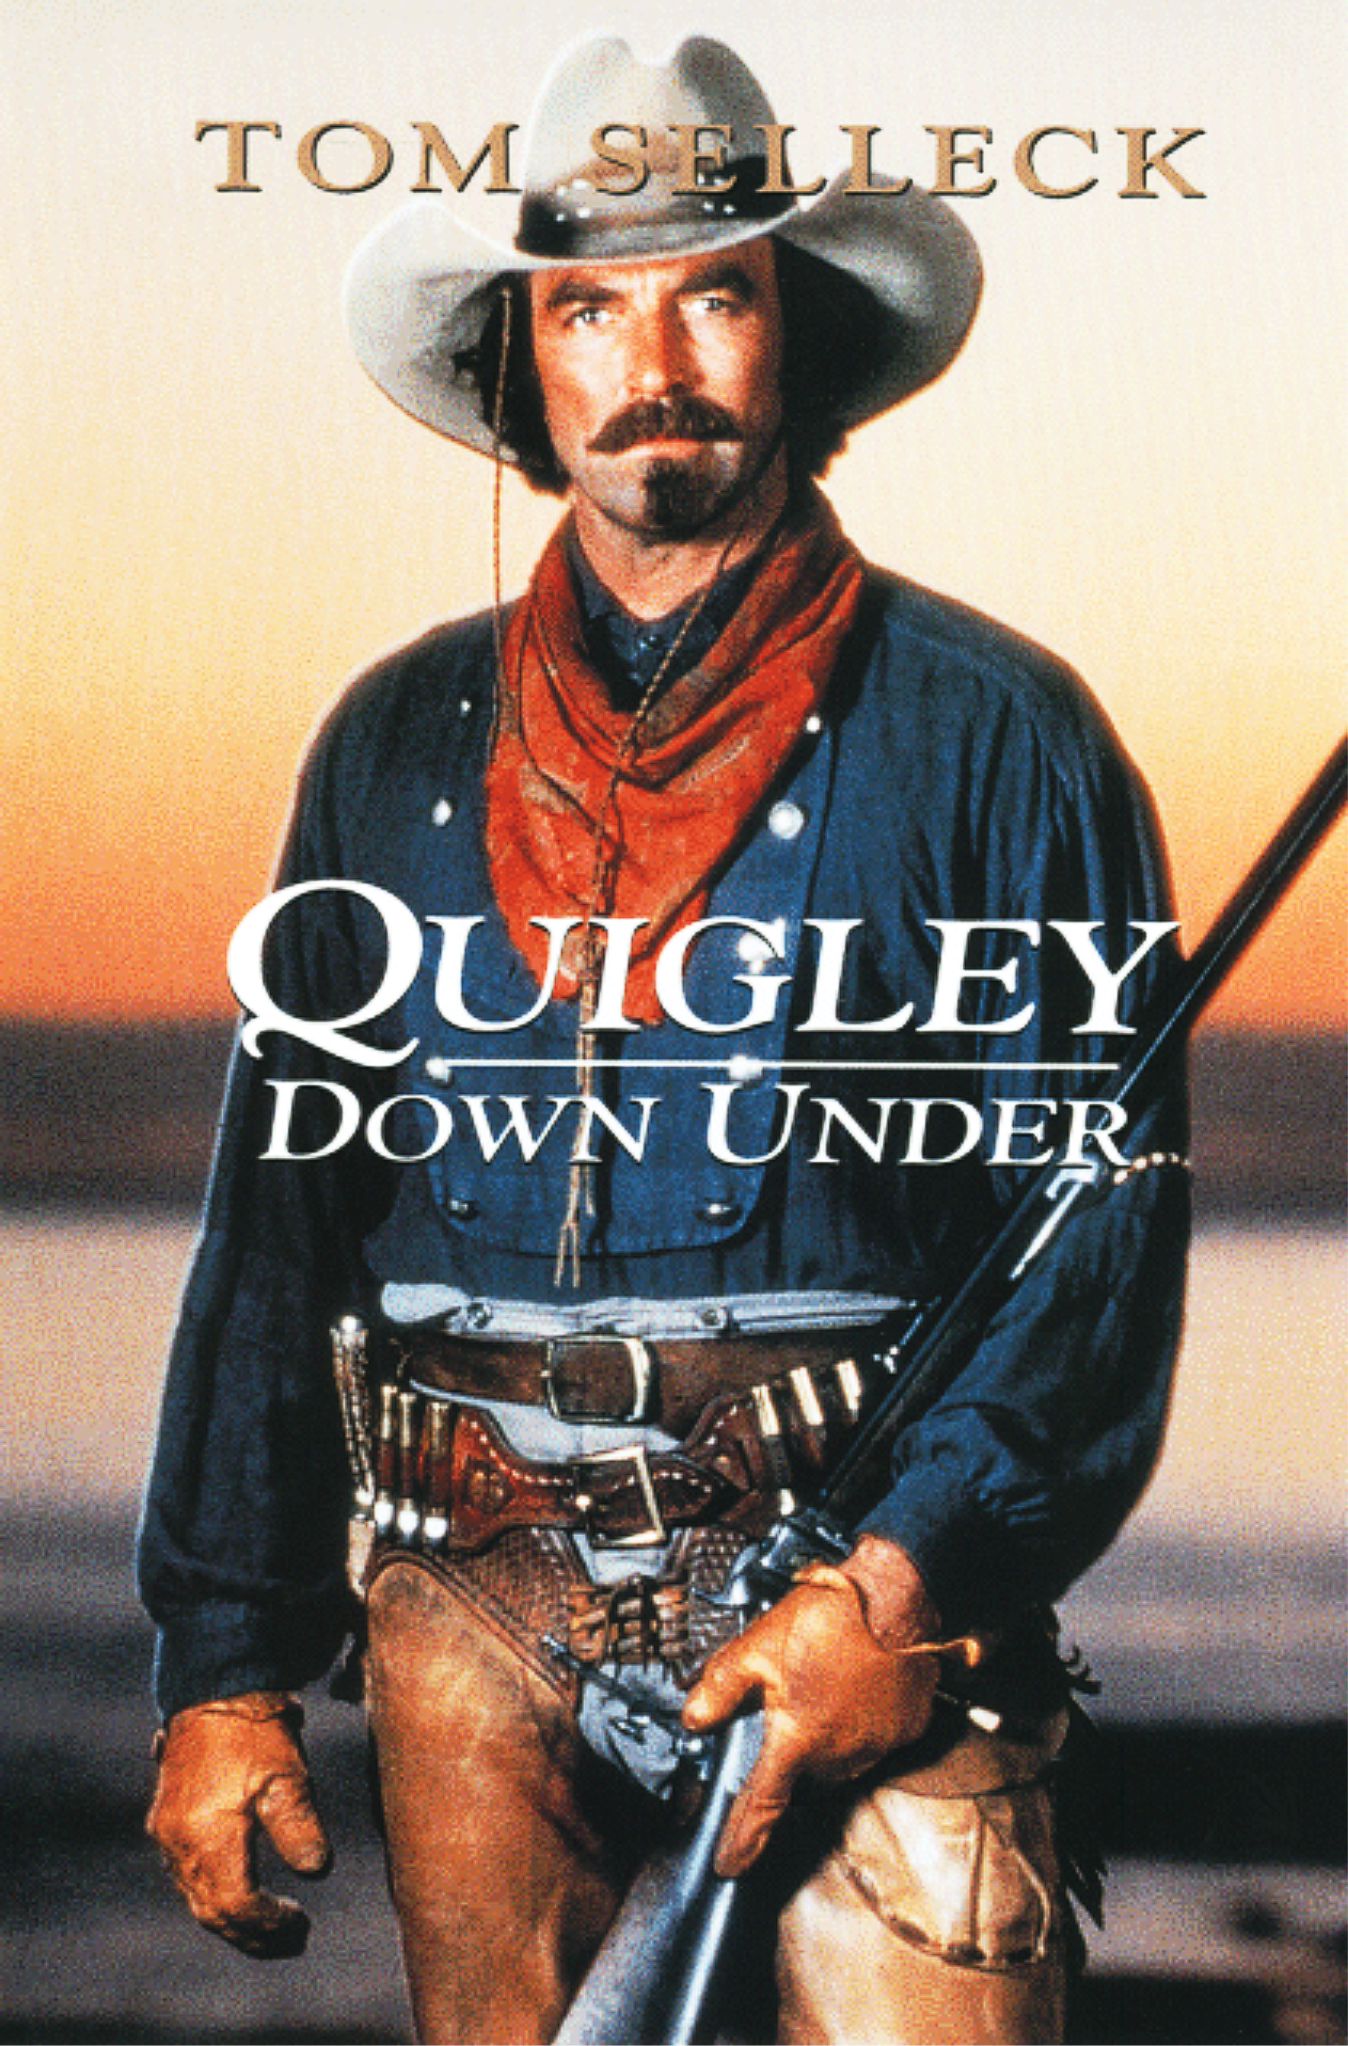 Quigley Downunder